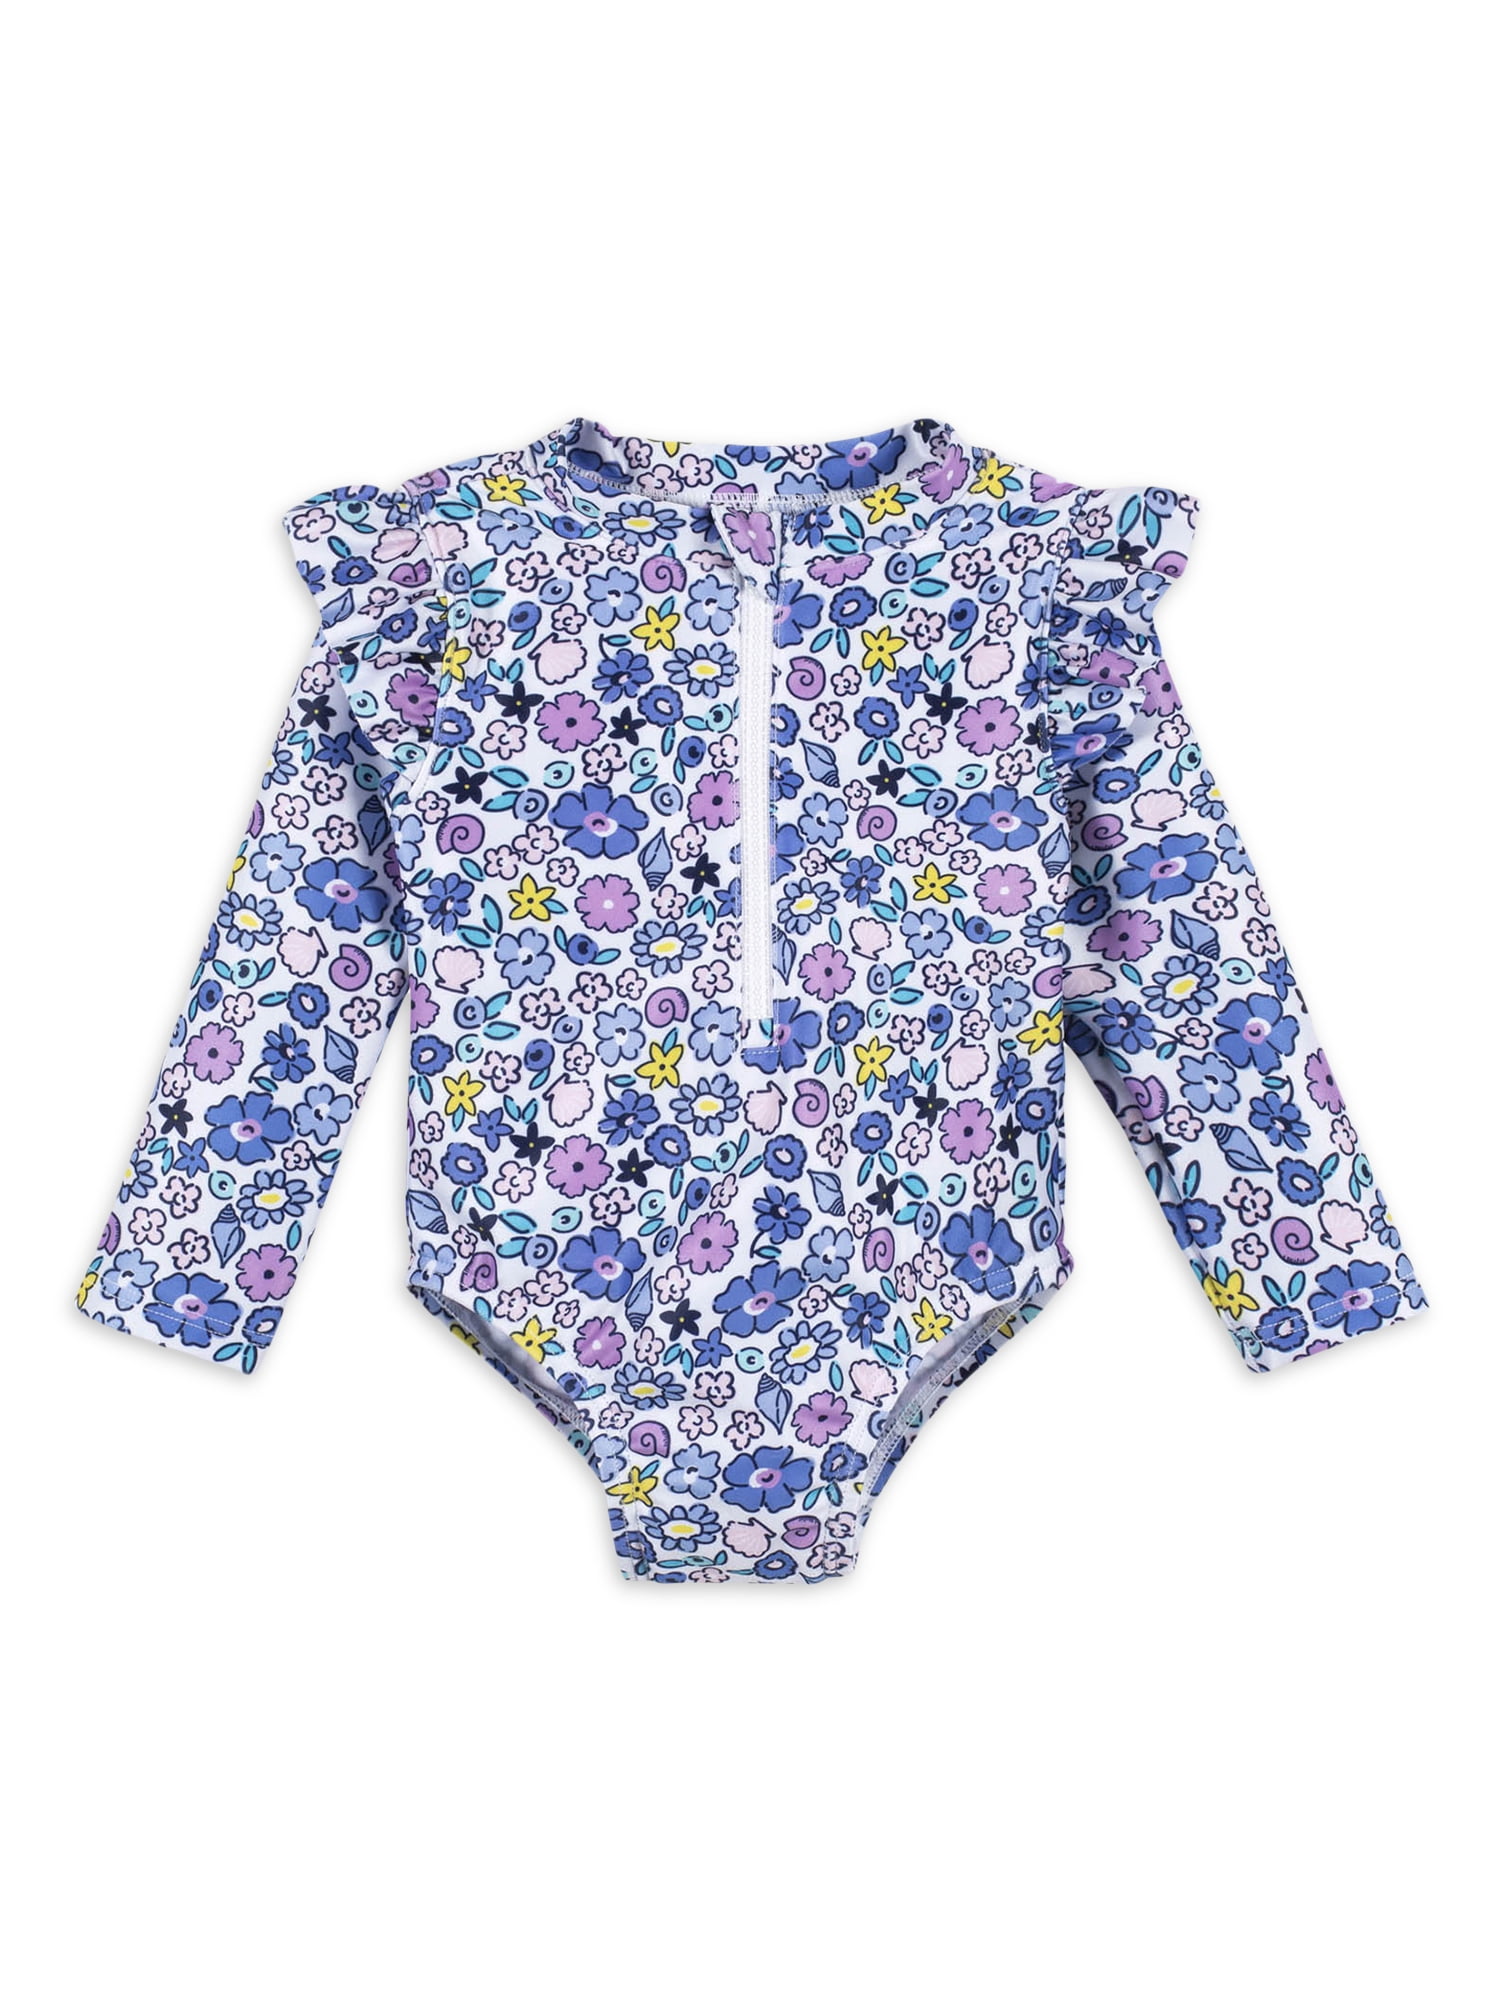 BFUSTYLE Baby Girls Ruffle Swimsuit Hawaiian Rashguard Shirt Toddler Long Sleeve Swimwear with Zipper 3-24M 